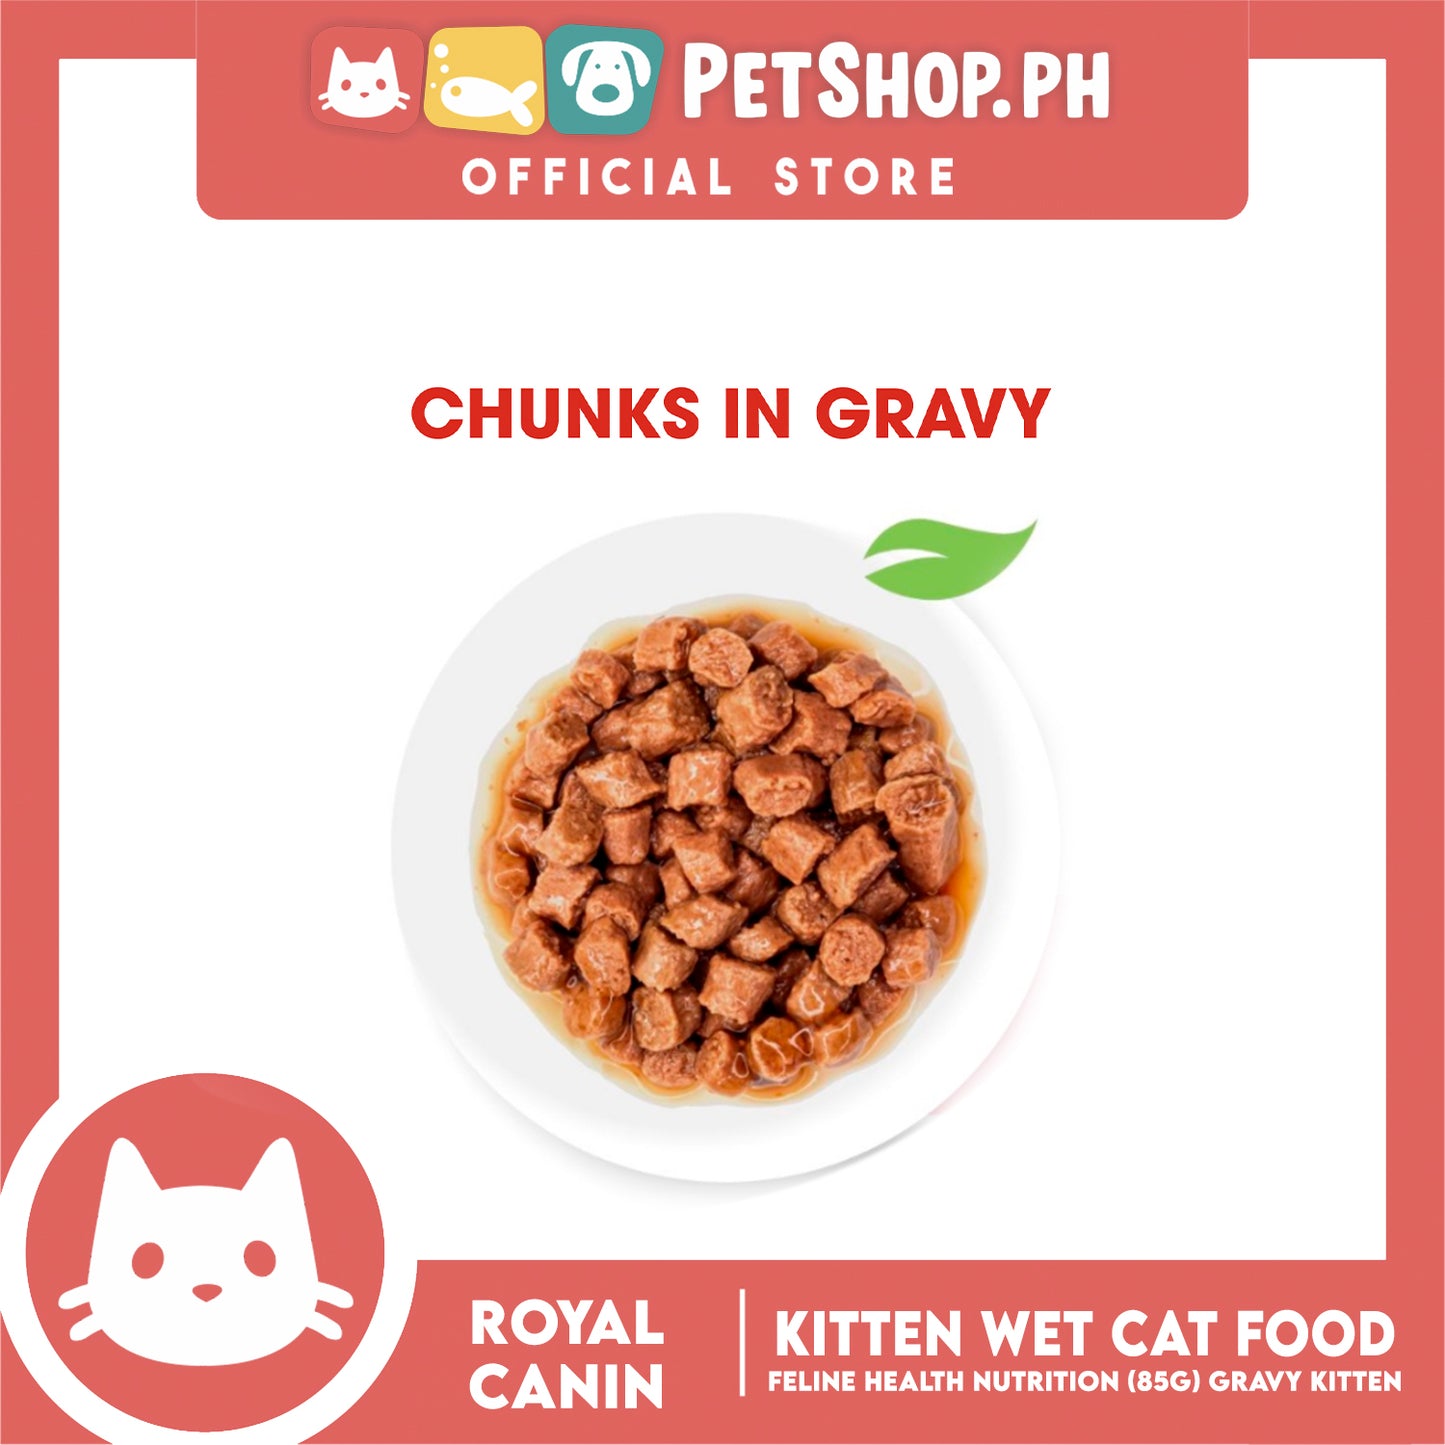 Royal Canin Kitten Gravy (85g) Wet Cat Food - Feline Health Nutrition